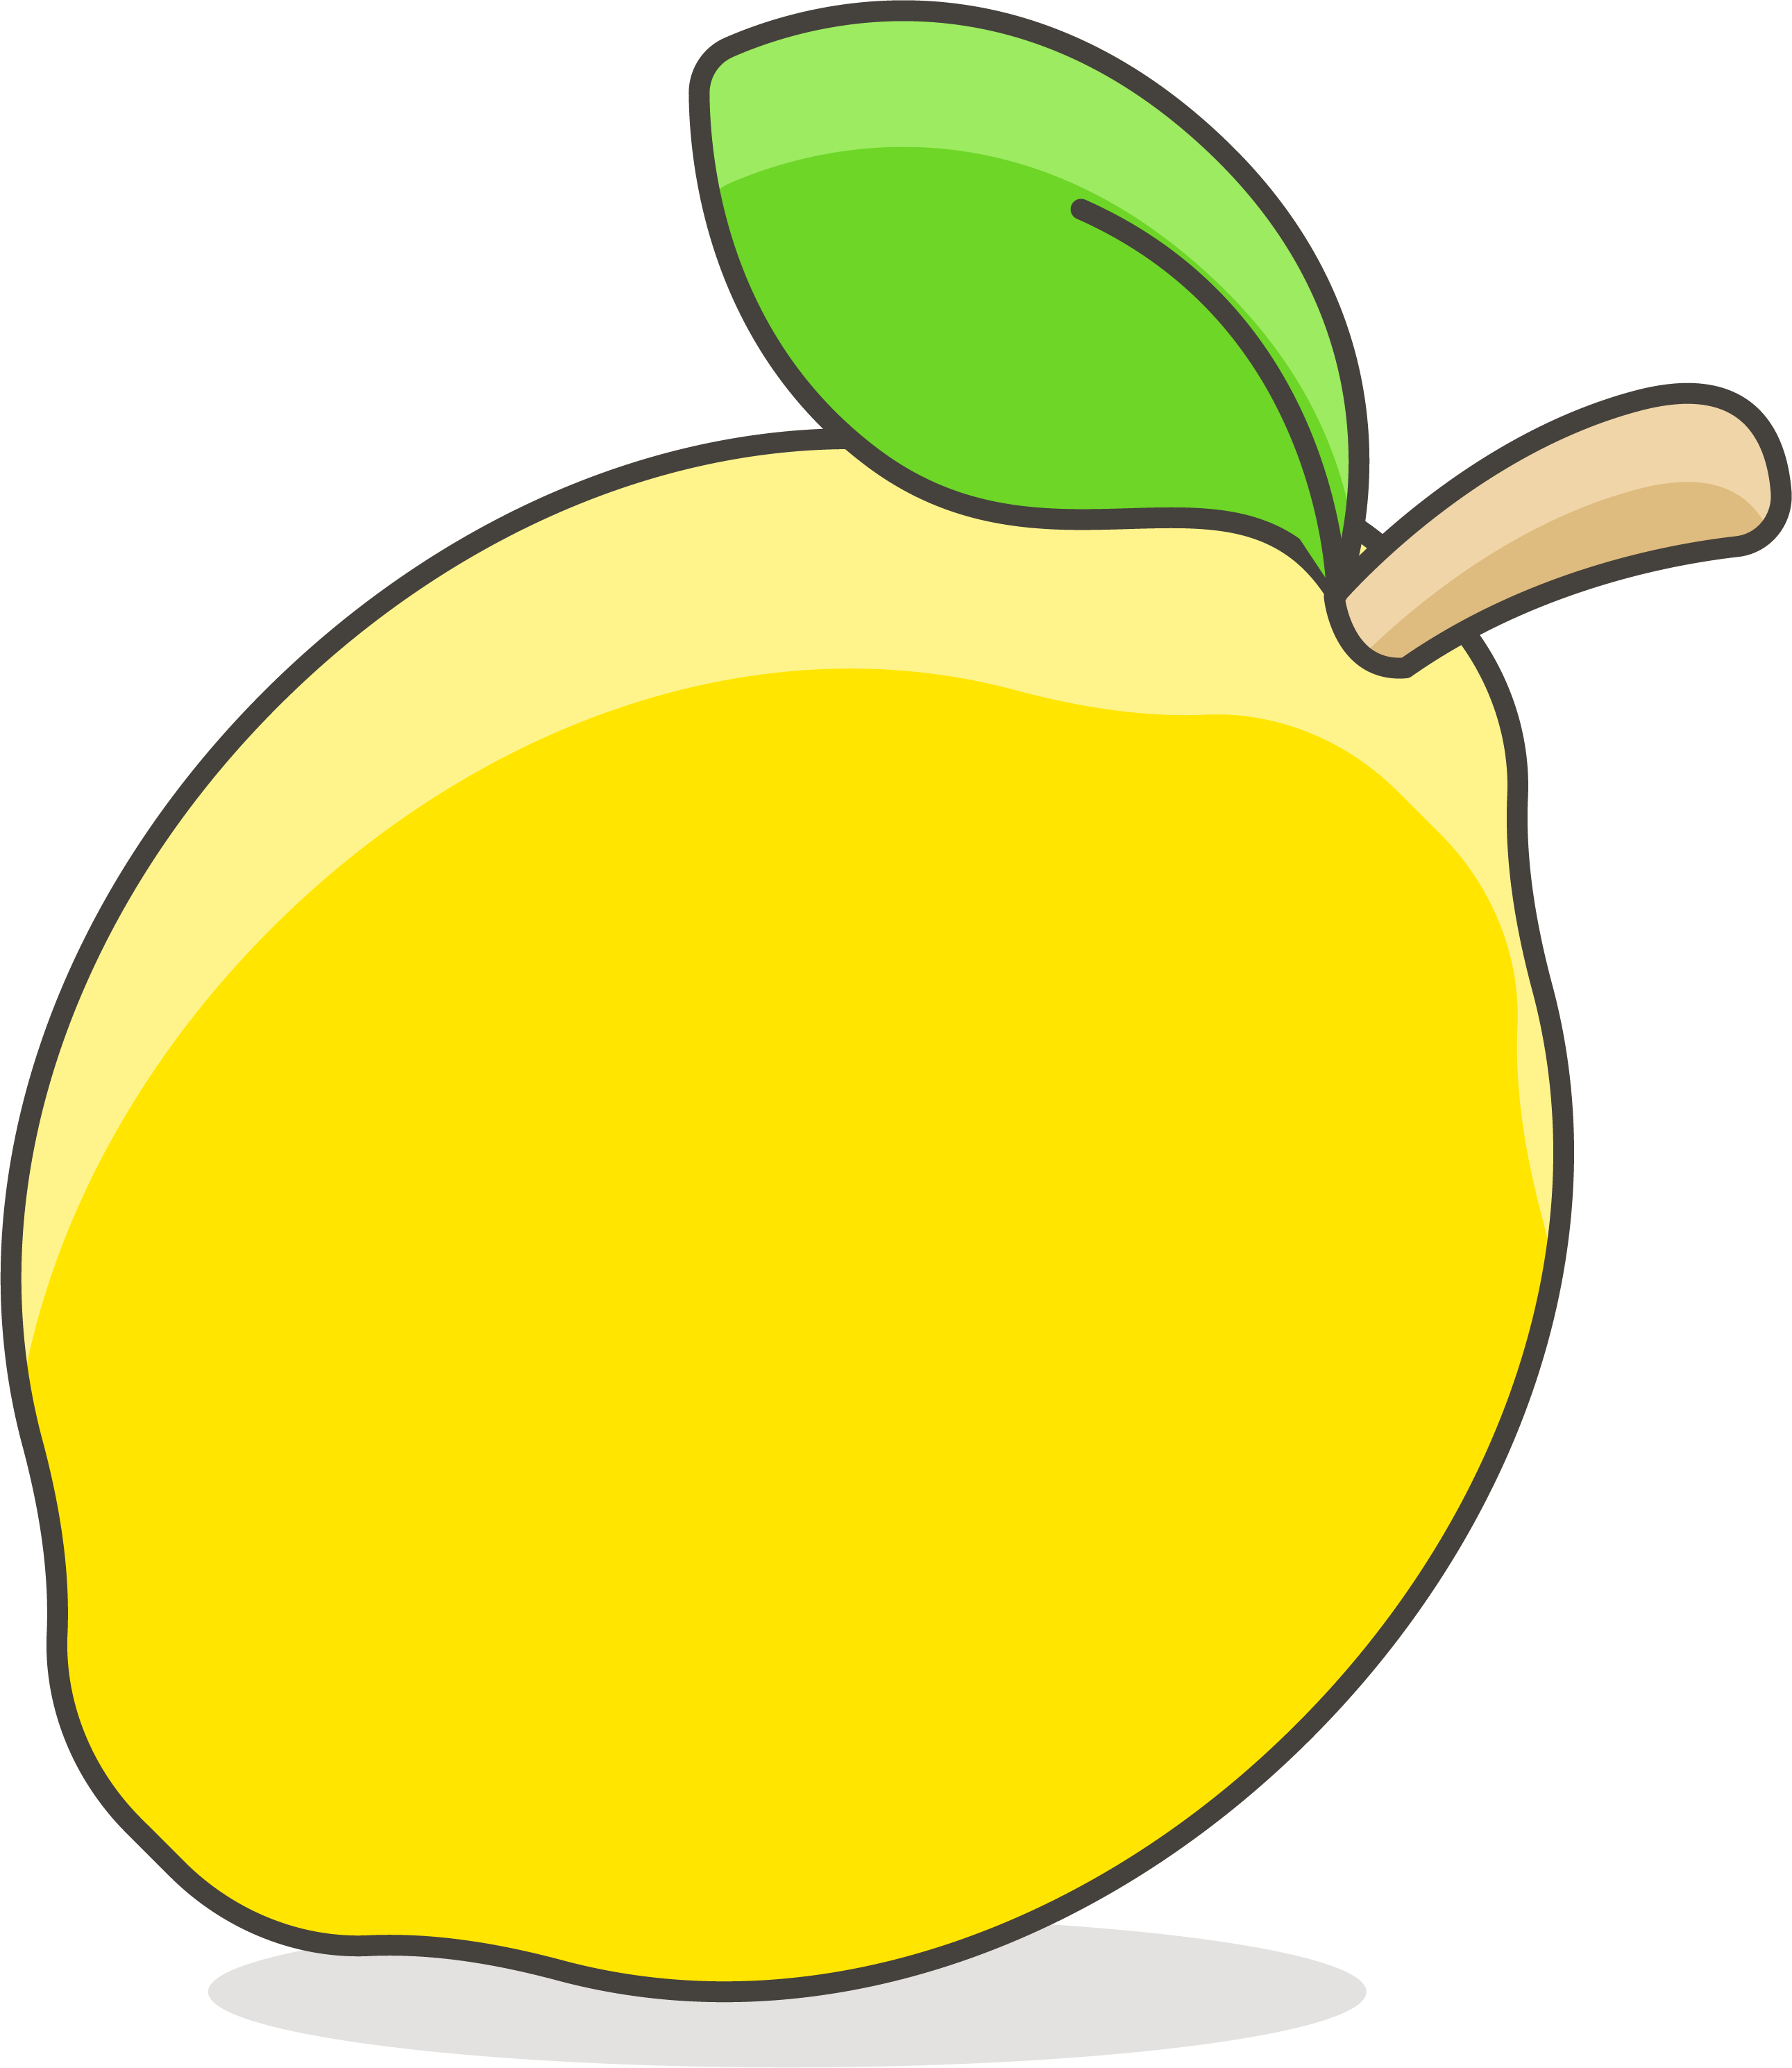 Lemon Fruit Sketch Vector Download